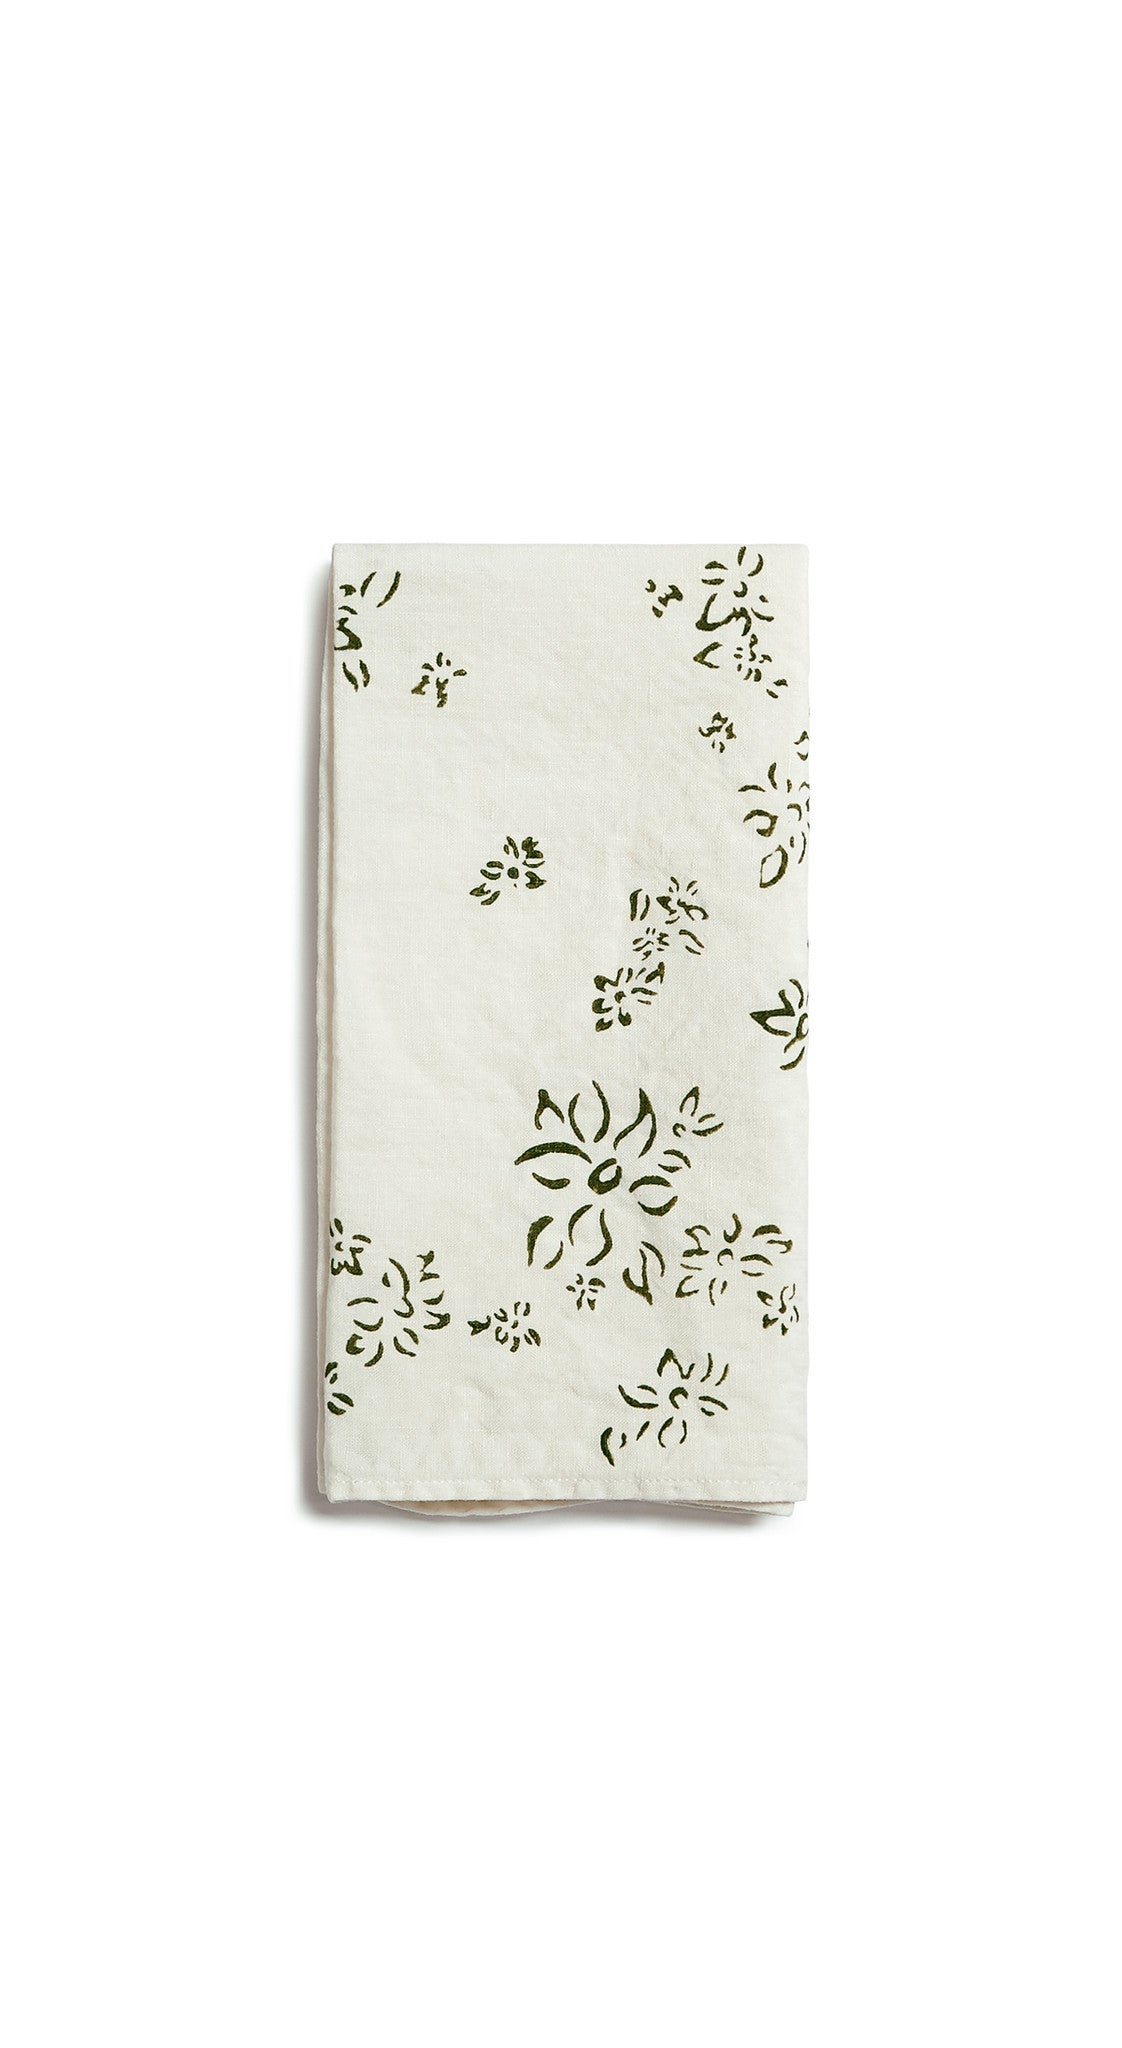 Bernadette's Hand Stamped Falling Flower Linen Napkin in Avocado Green, 50x50cm